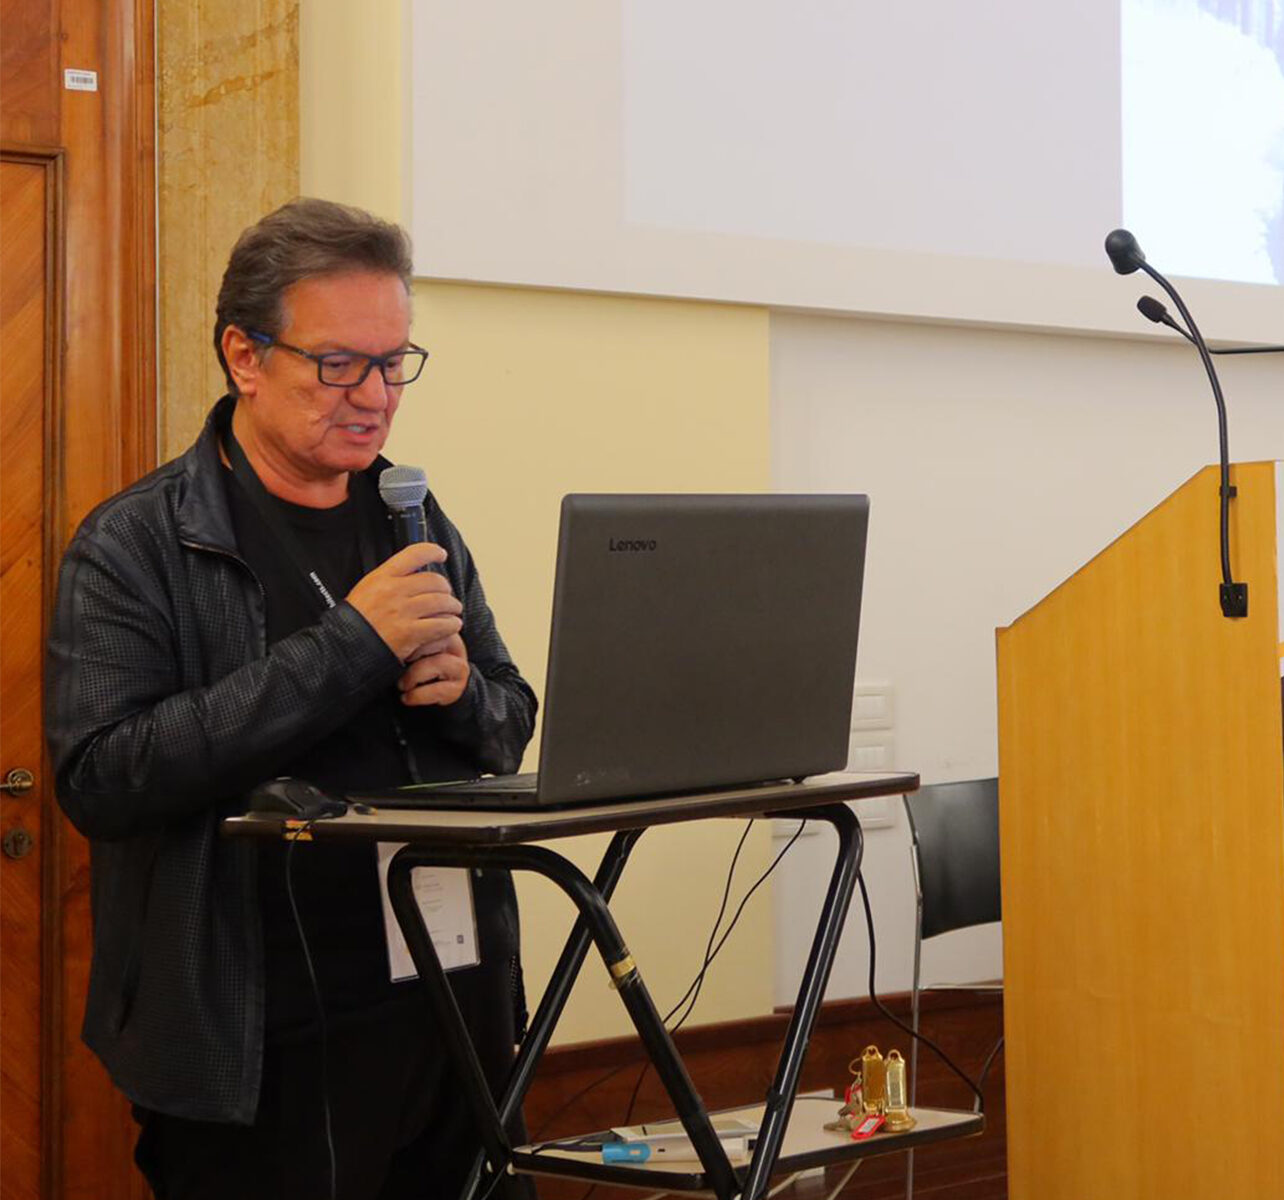 EAA – EMRE AROLAT ARCHITECTURE | Emre Arolat Lectured At Share Talks In Venice